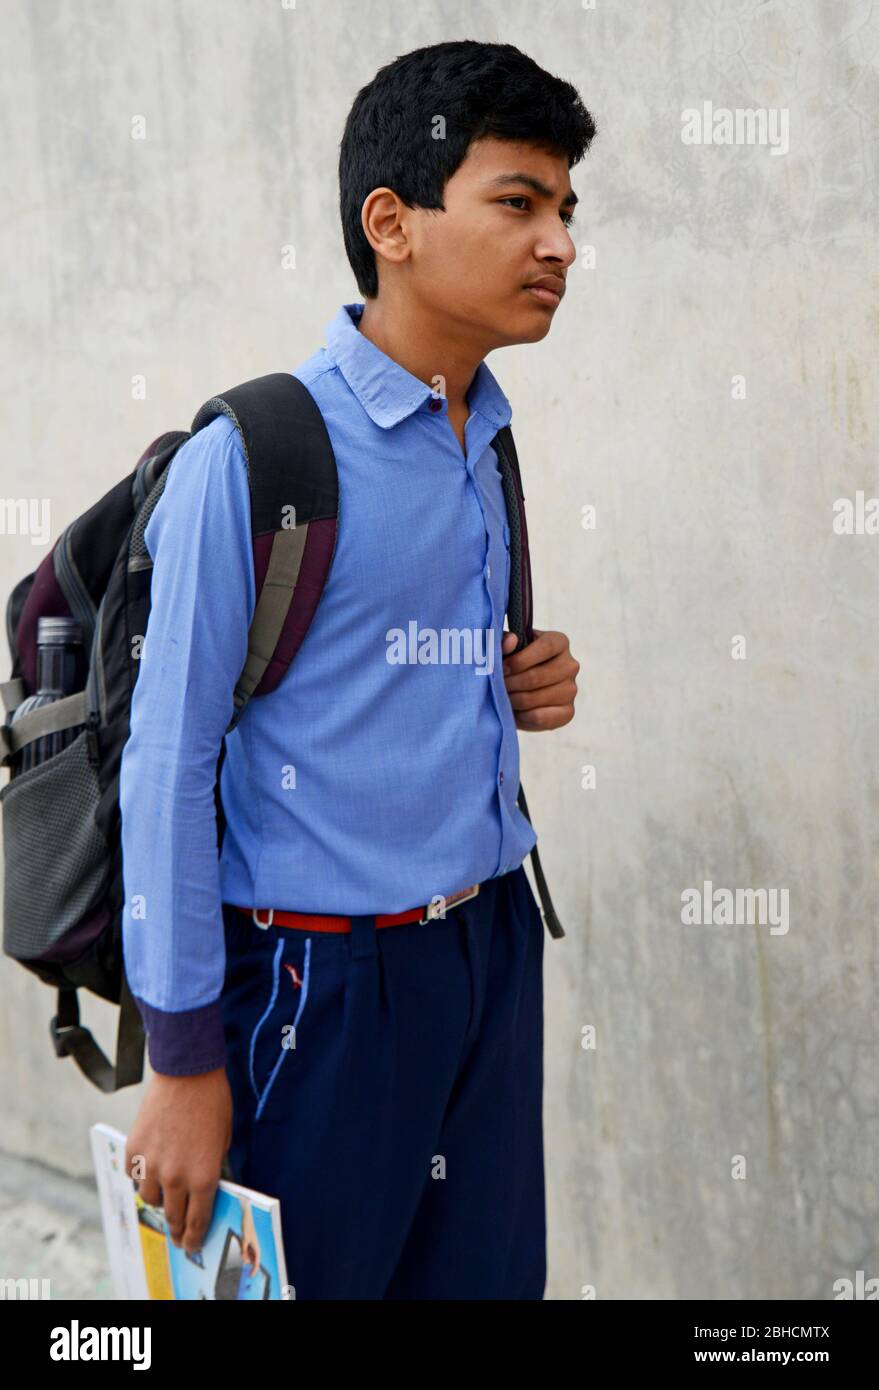 School boy wearing uniform and bag Stock Photo - Alamy